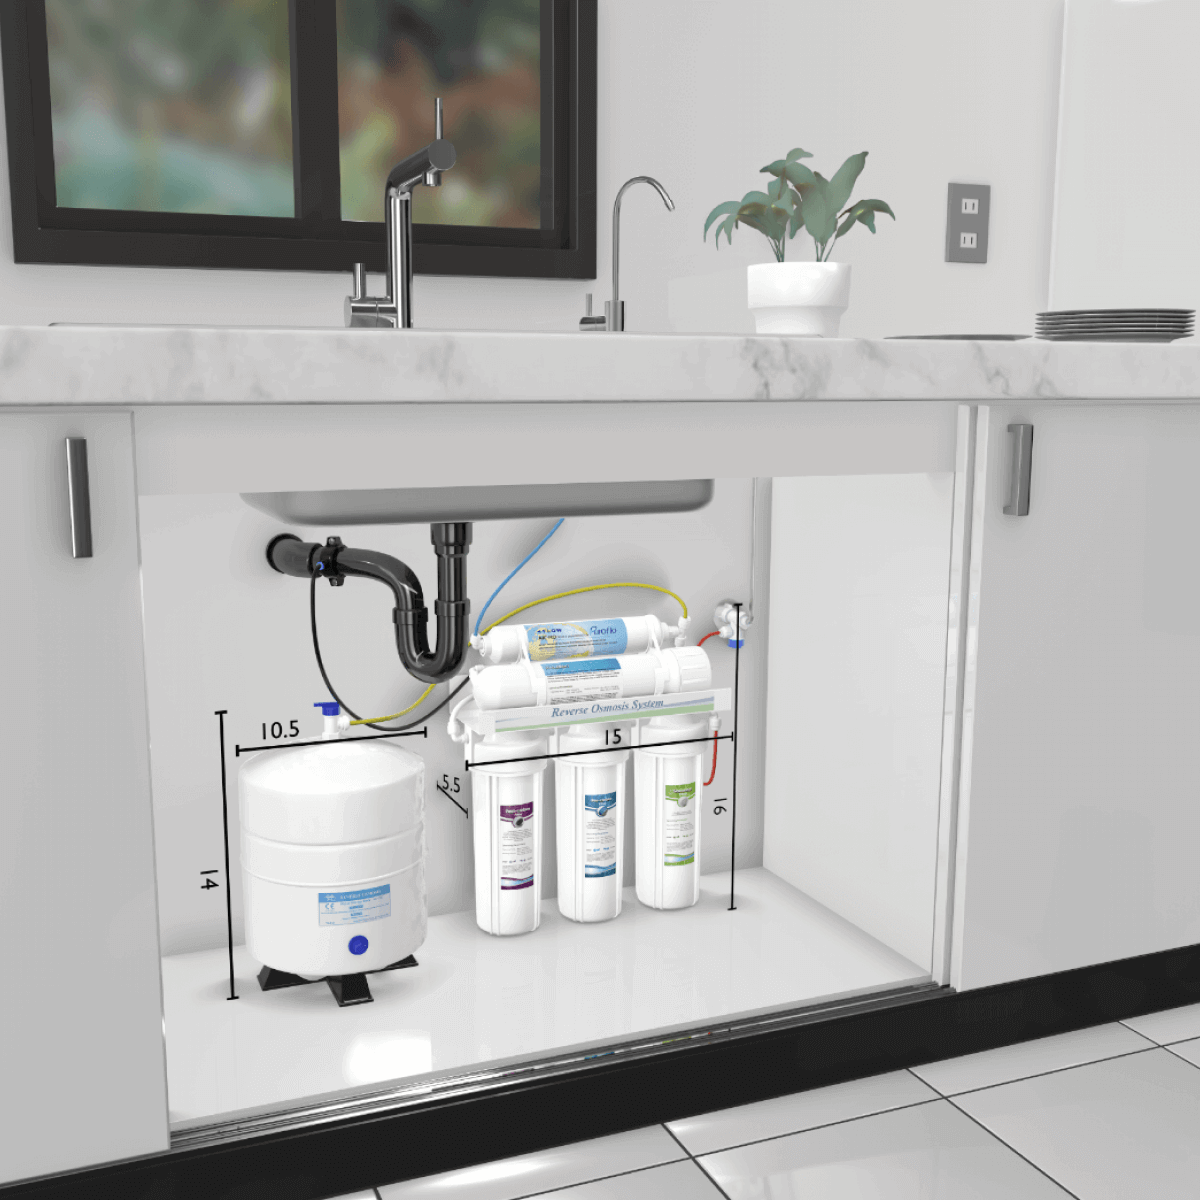 Puroflo ERO Reverse Osmosis Water Filtration System